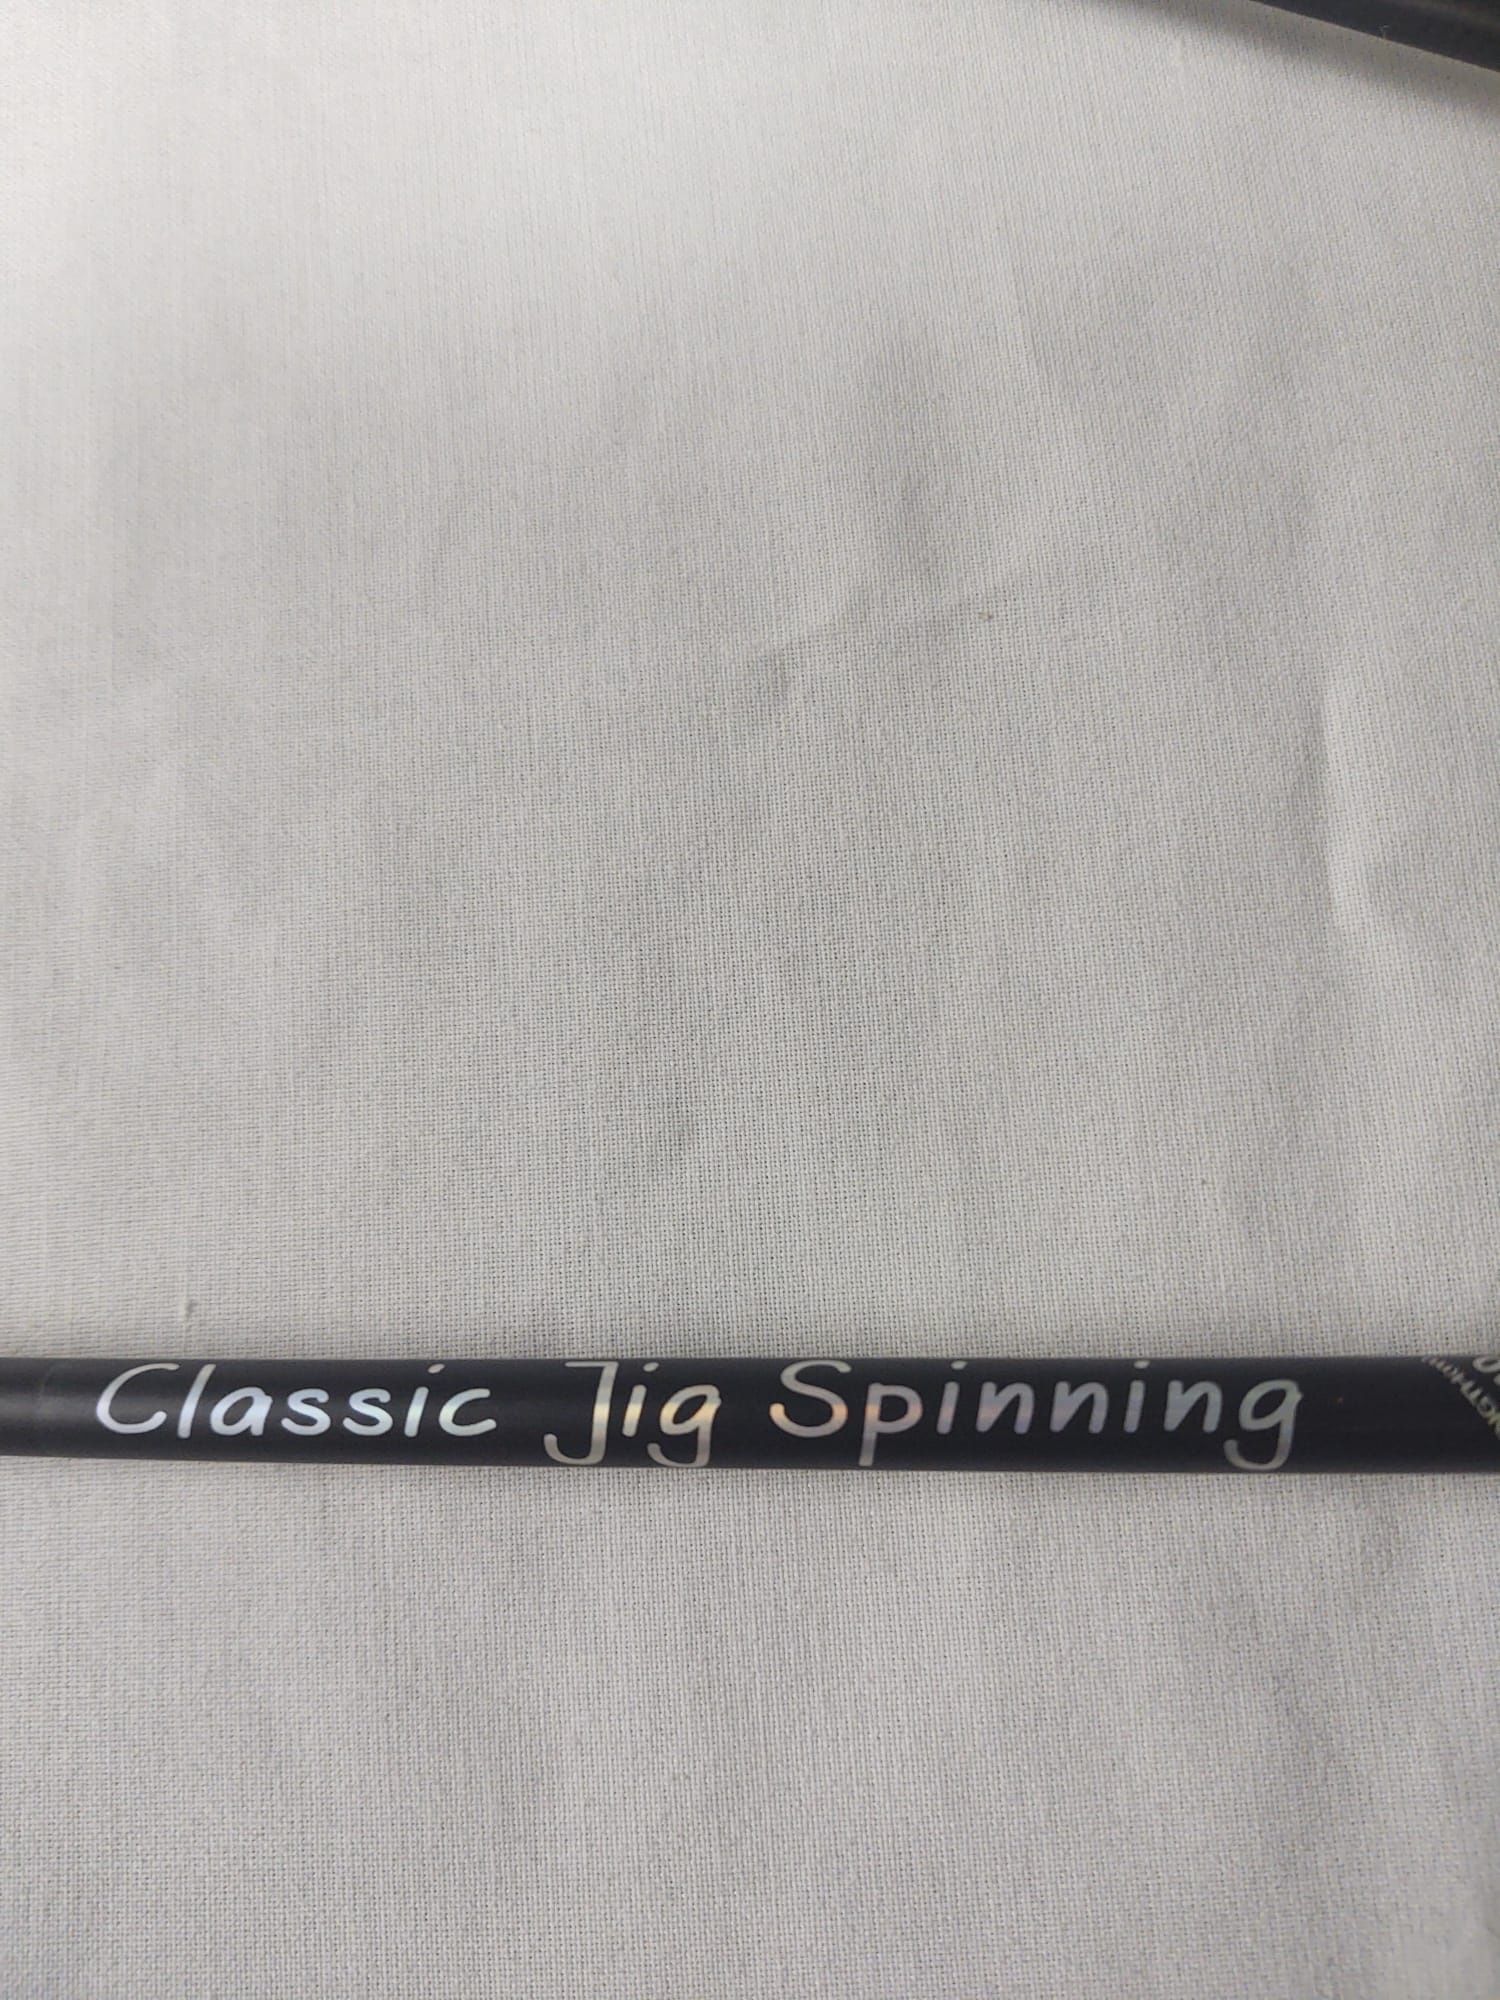 Spinning Classic Jig 240cm 2-8g